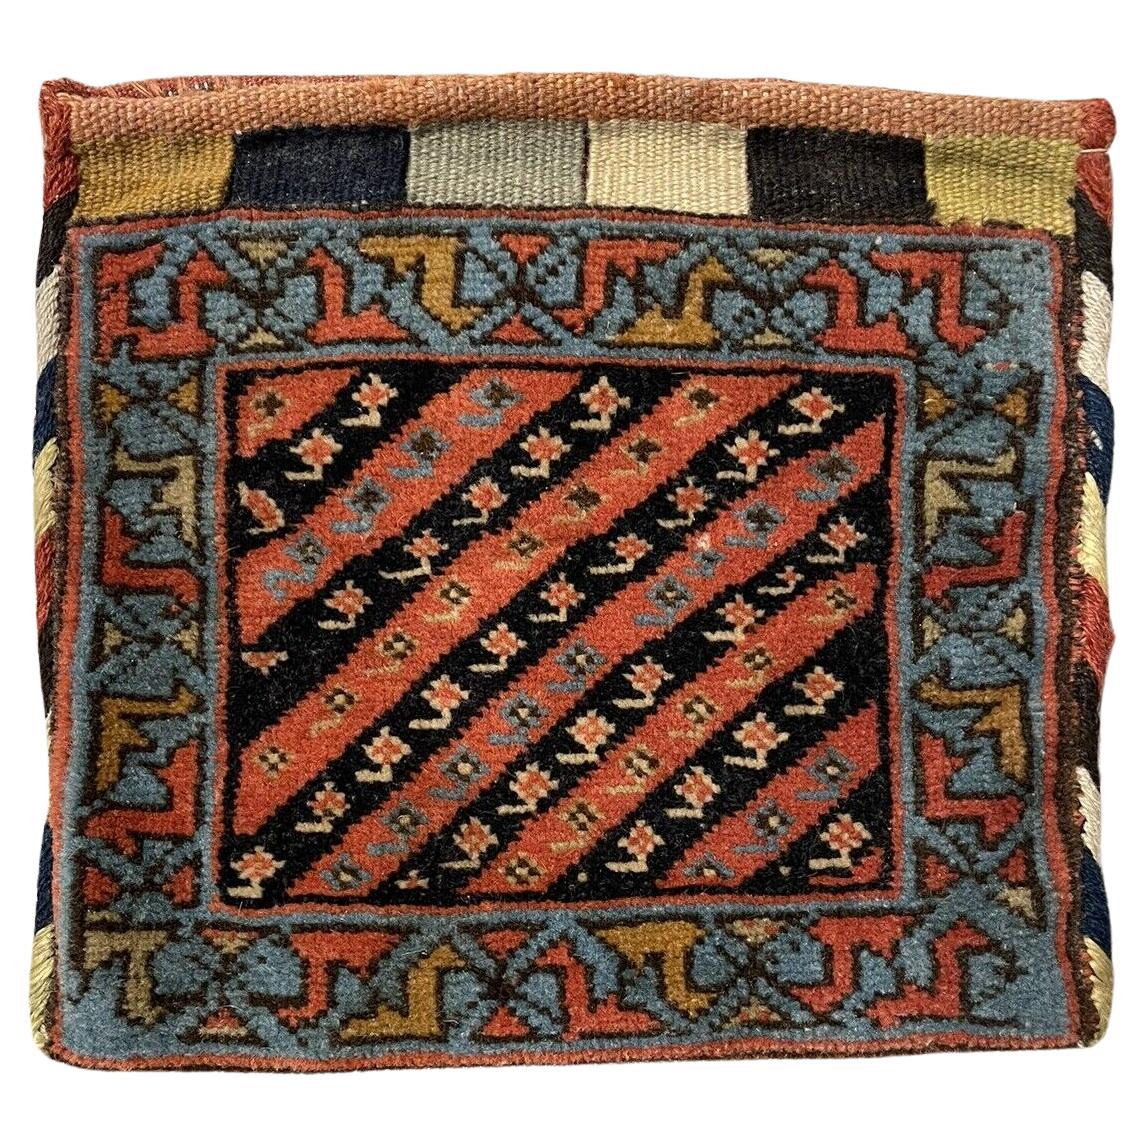 Handmade Antique Persian Gashkai Small Bag 9" x 9", 1900s - 1N14 For Sale